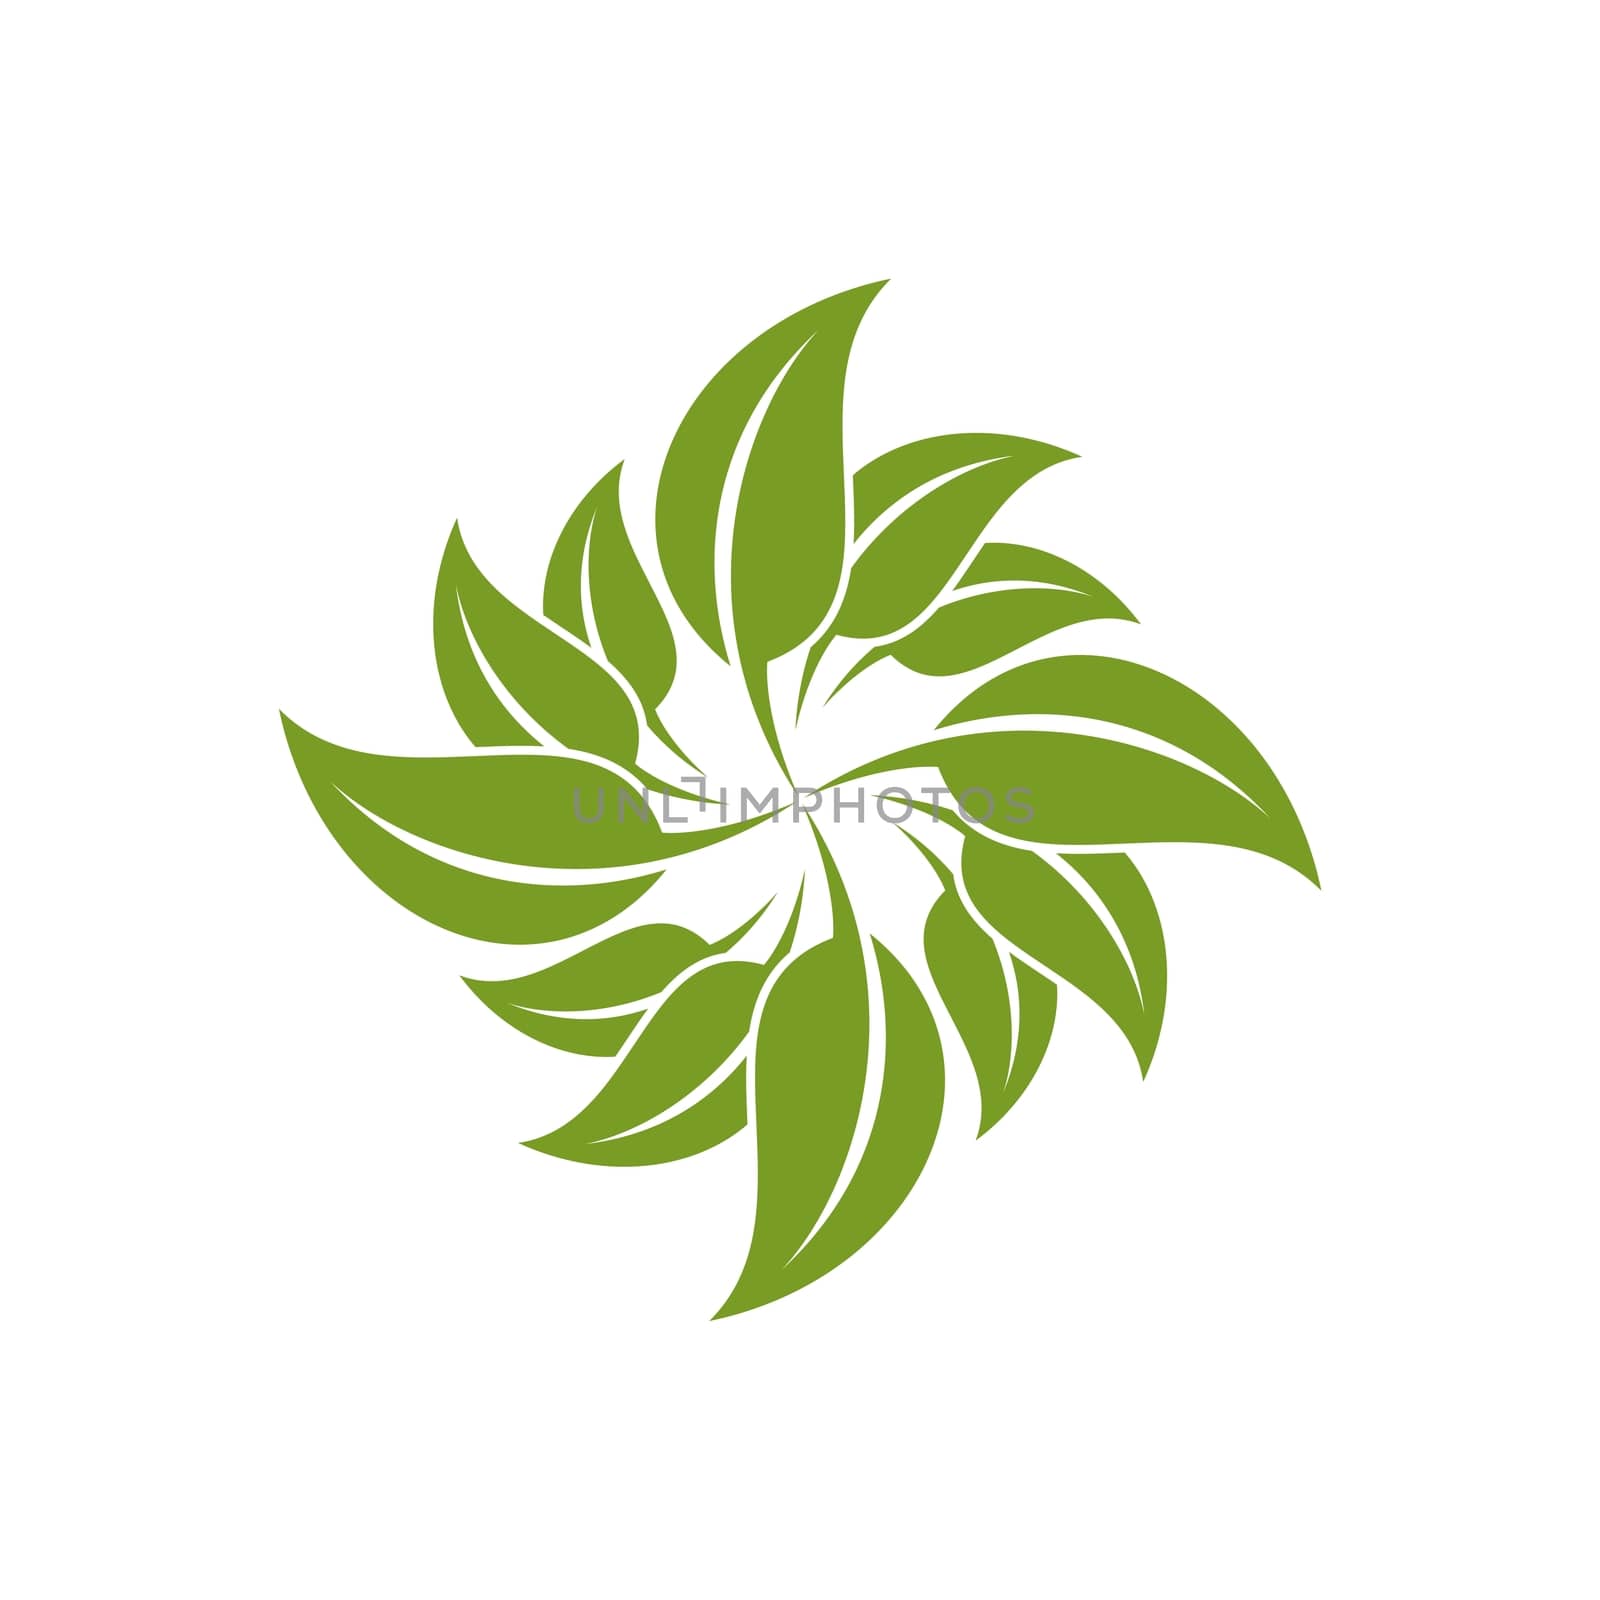 Green Leaf Ecology Logo Template Illustration Design. Vector EPS 10. by soponyono